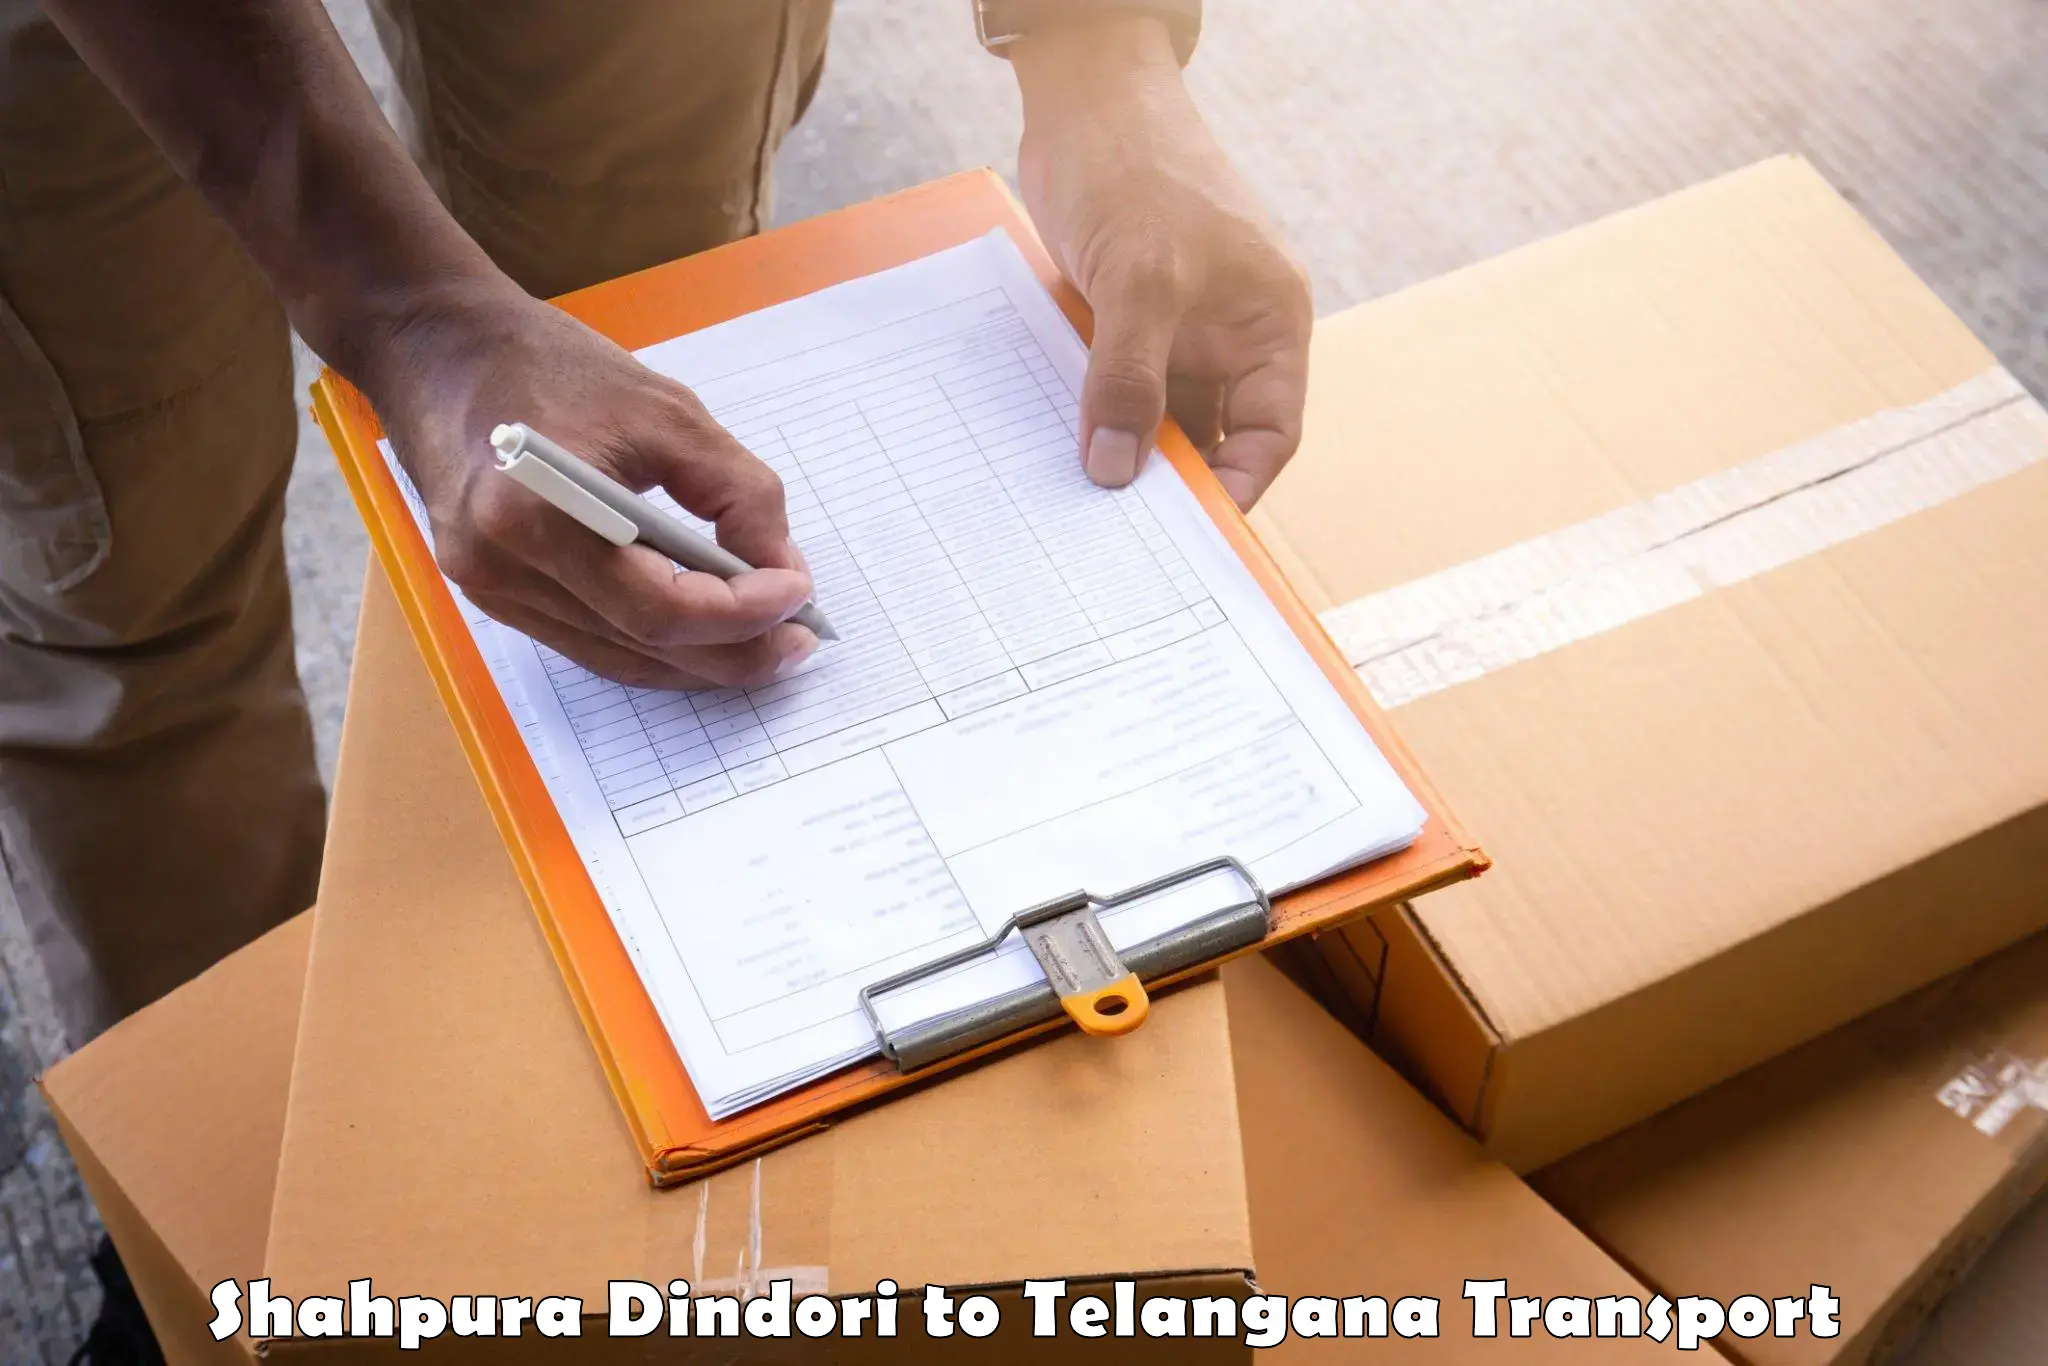 Commercial transport service Shahpura Dindori to Telangana